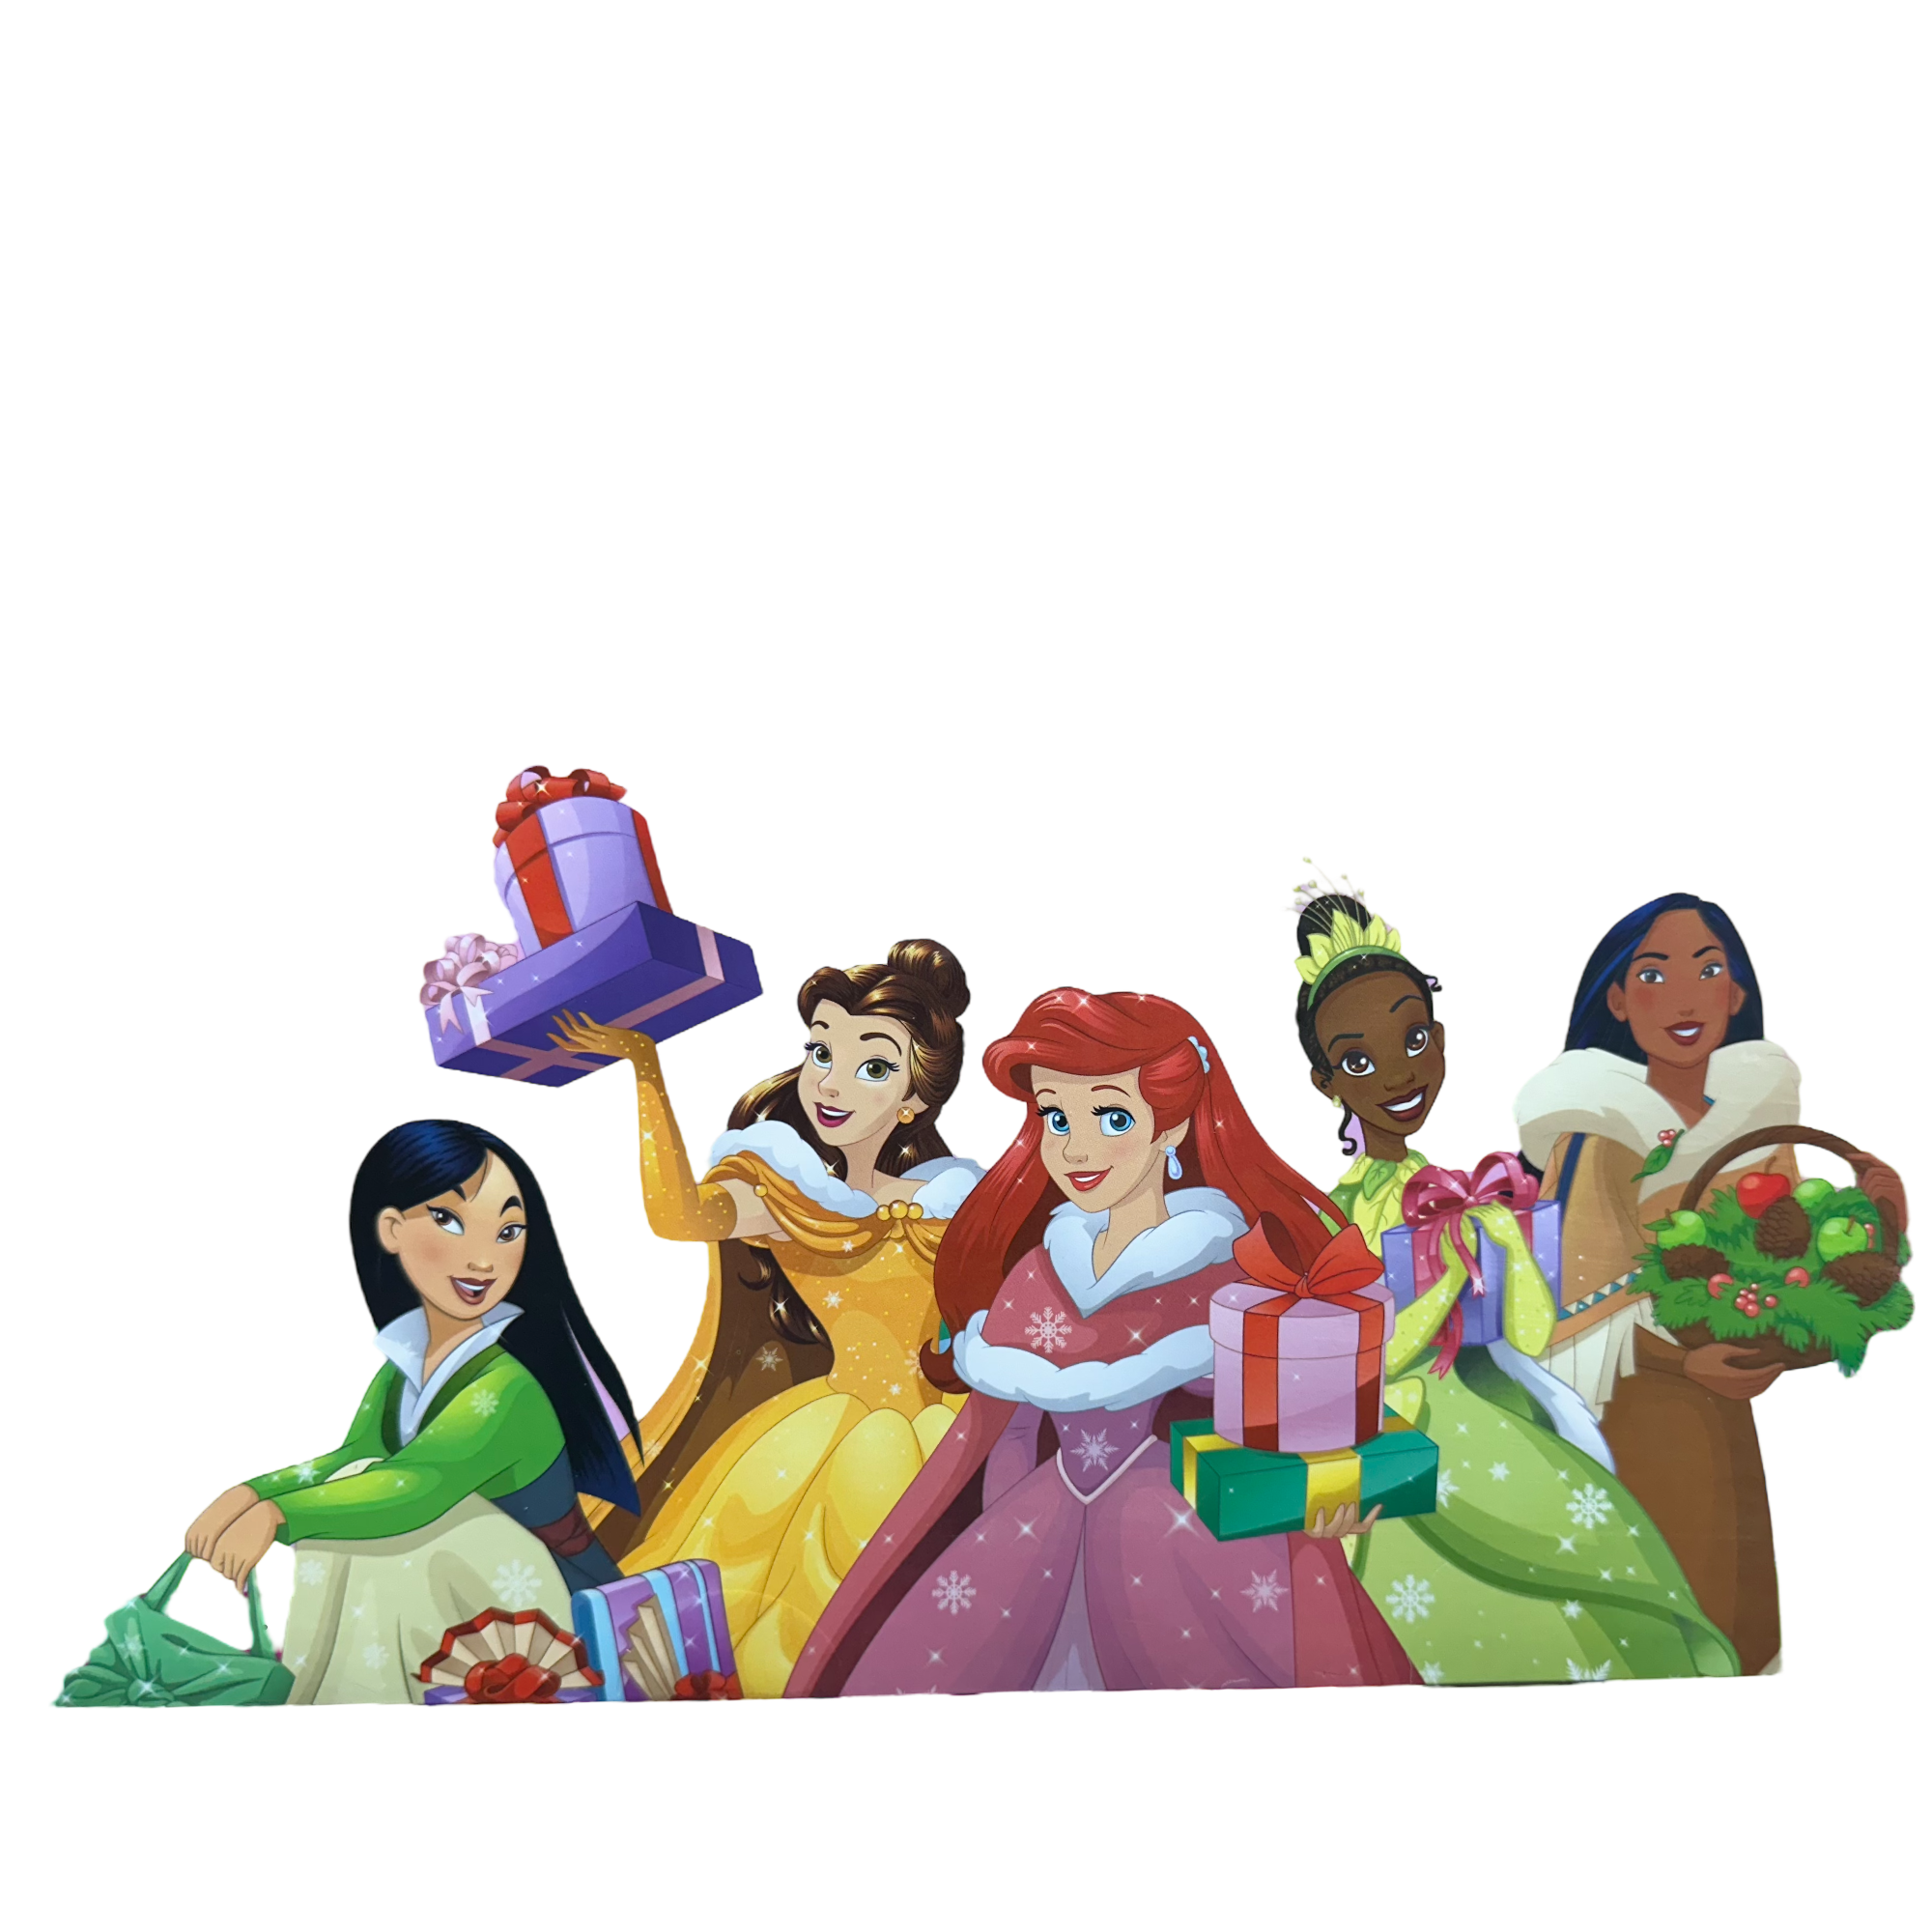 Disney princesses - calendrier de l'avent princesses